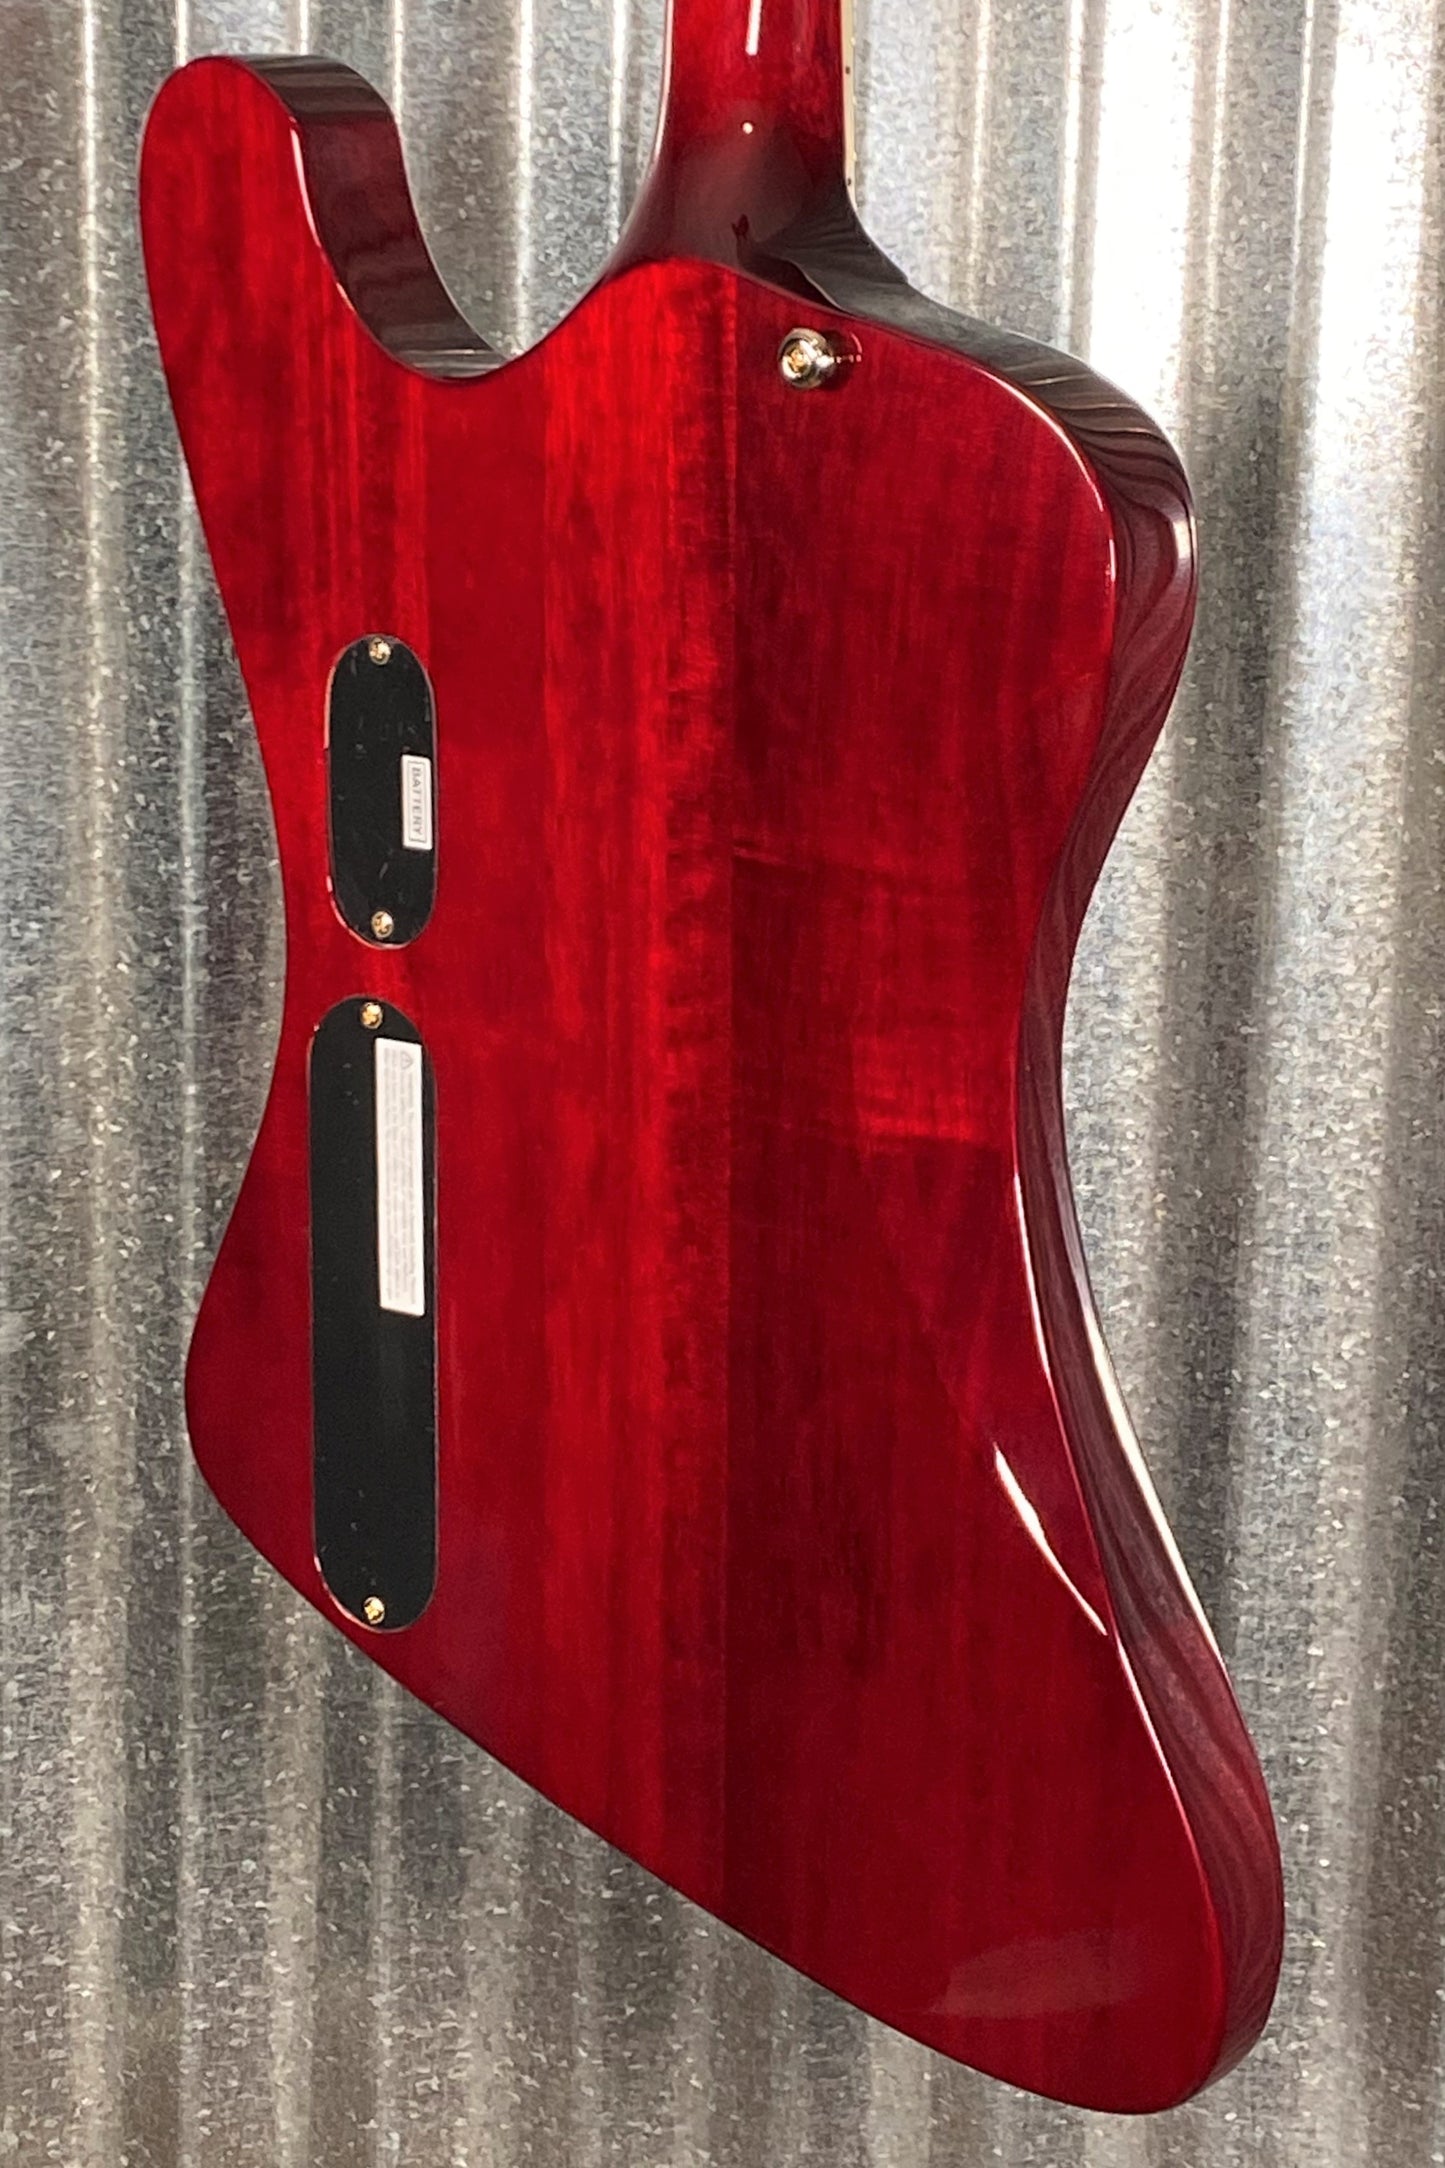 ESP LTD Phoenix 1000 See Thru Black Cherry Fishman Fluence Guitar PHOENIX1000STBC #2213 Used